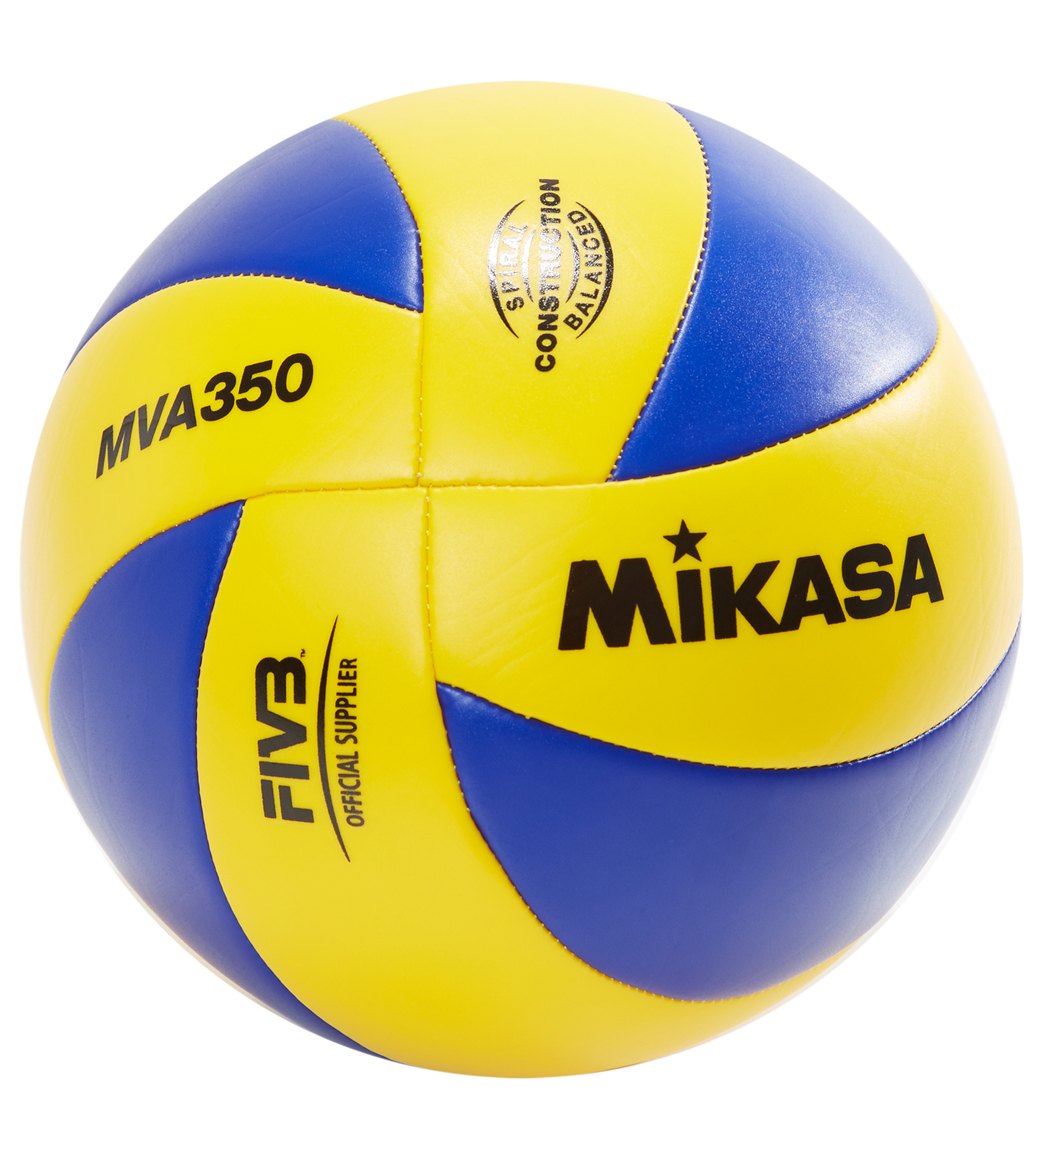 Mikasa Sports USA MVA350 Size 5 Volleyball at SwimOutlet.com